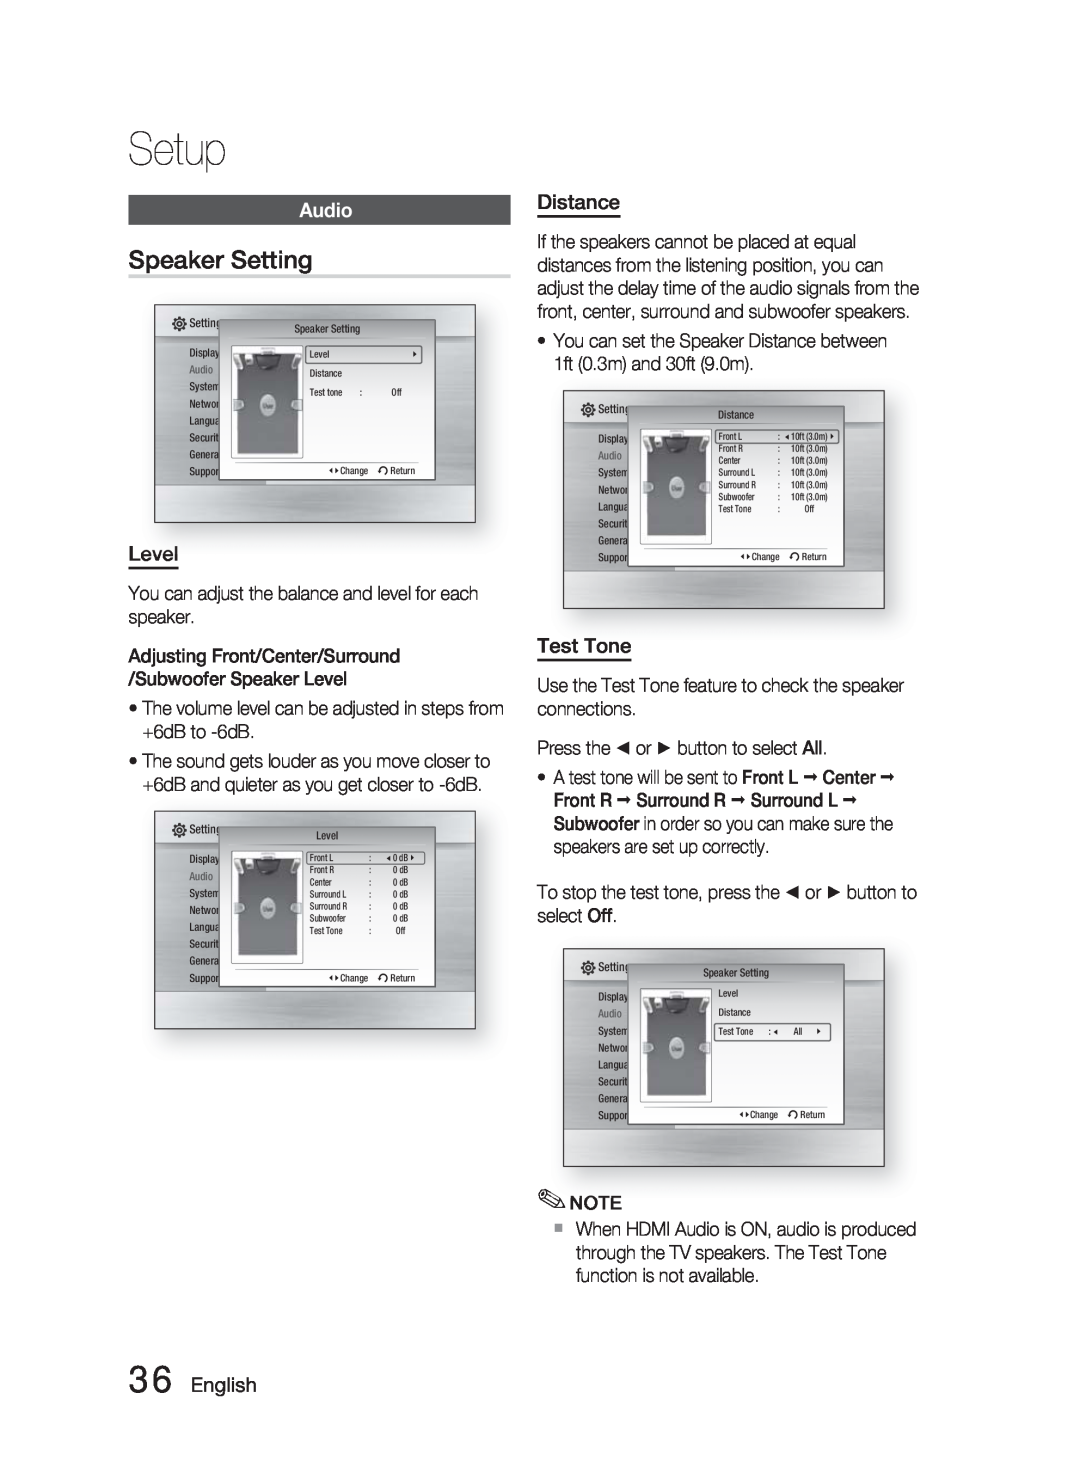 Samsung AH68-02279R user manual Speaker Setting, Audio, Level, Distance, Test Tone, English, Setup 